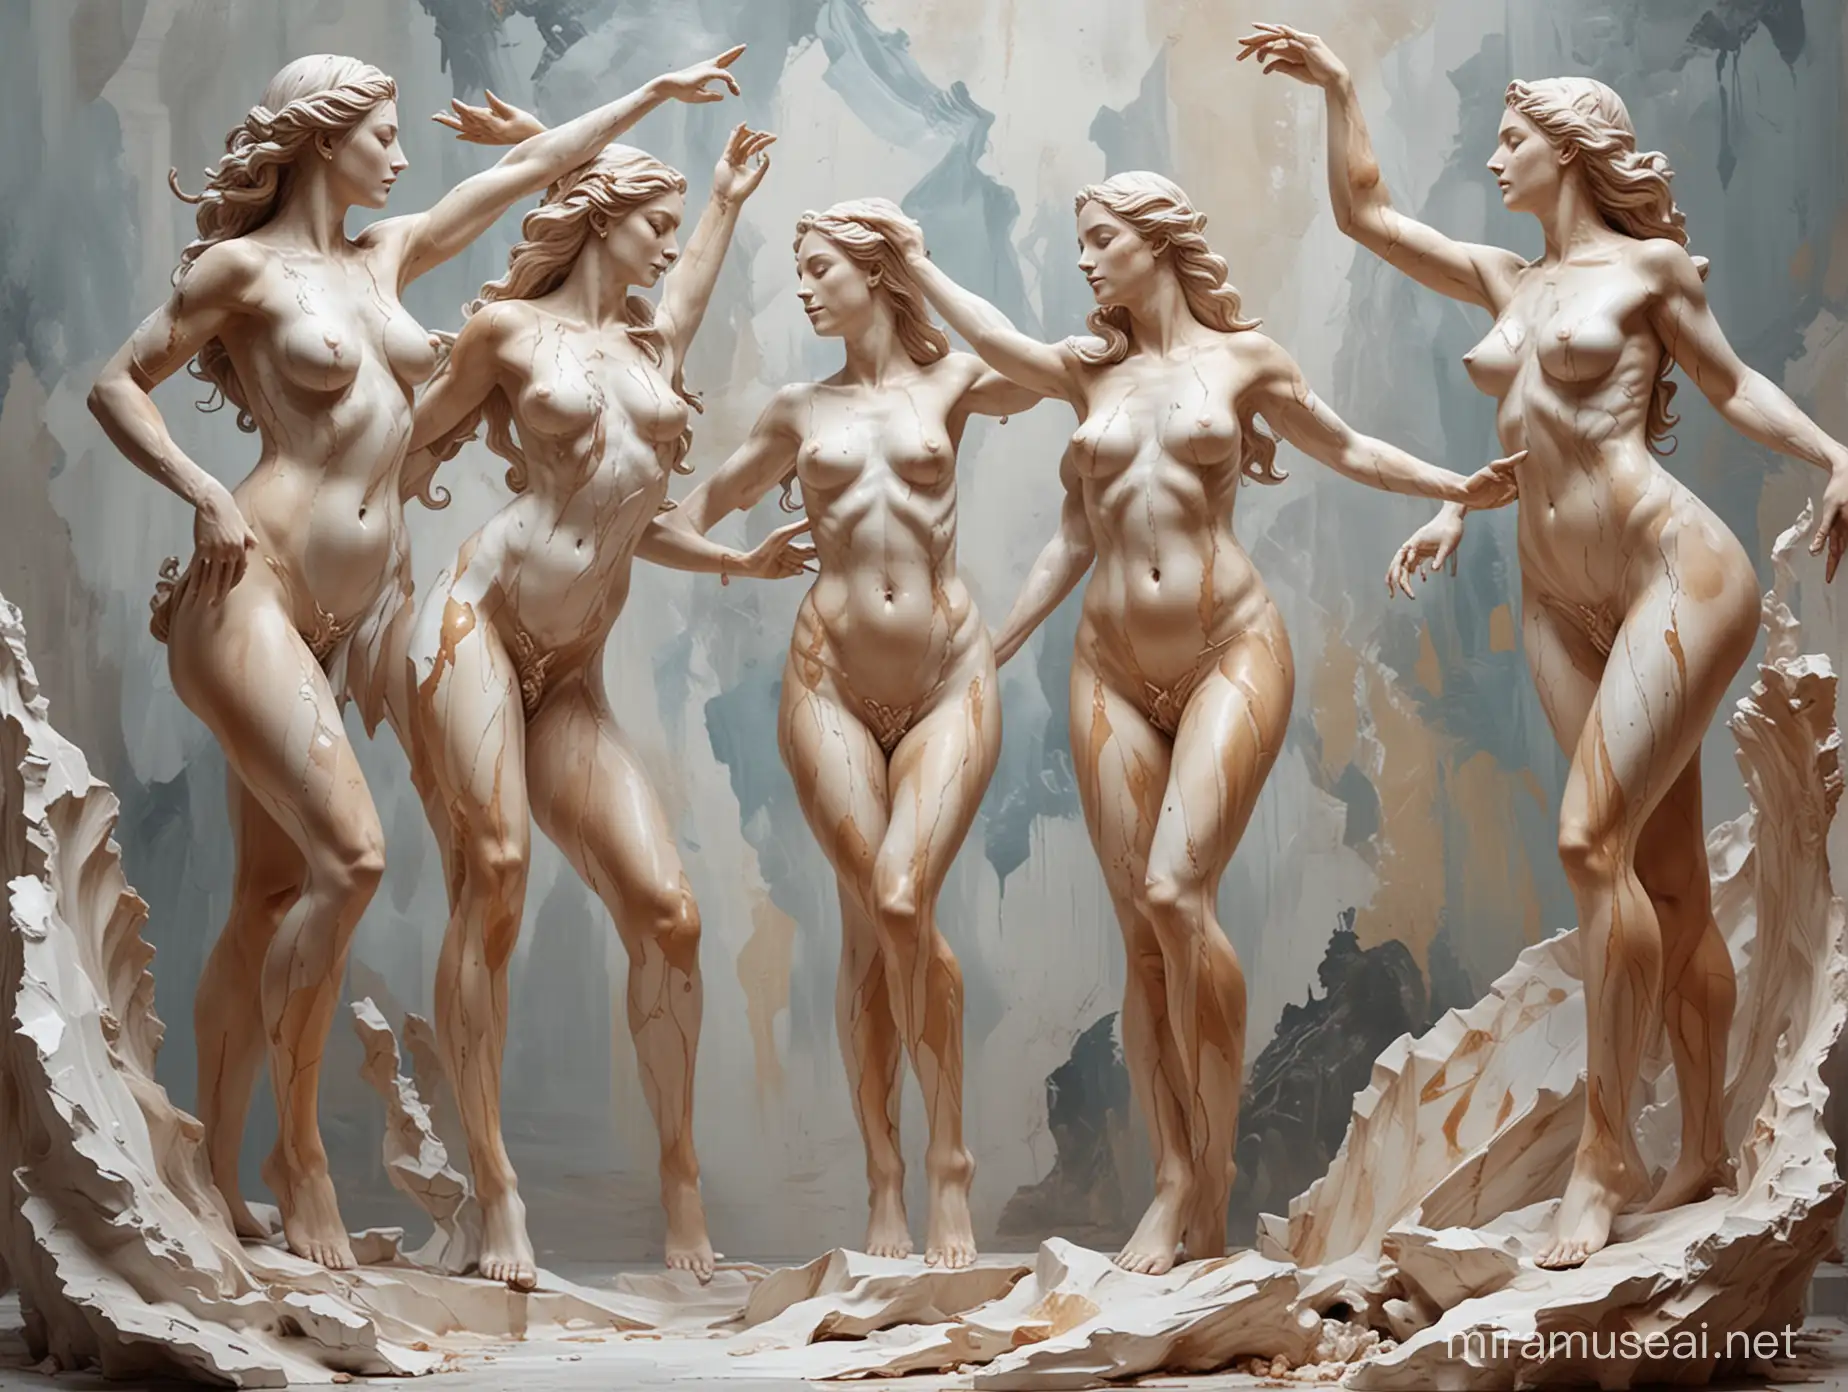 Body Painted Women Dancing Around Broken Marble Venus Statue in Abstract Landscape